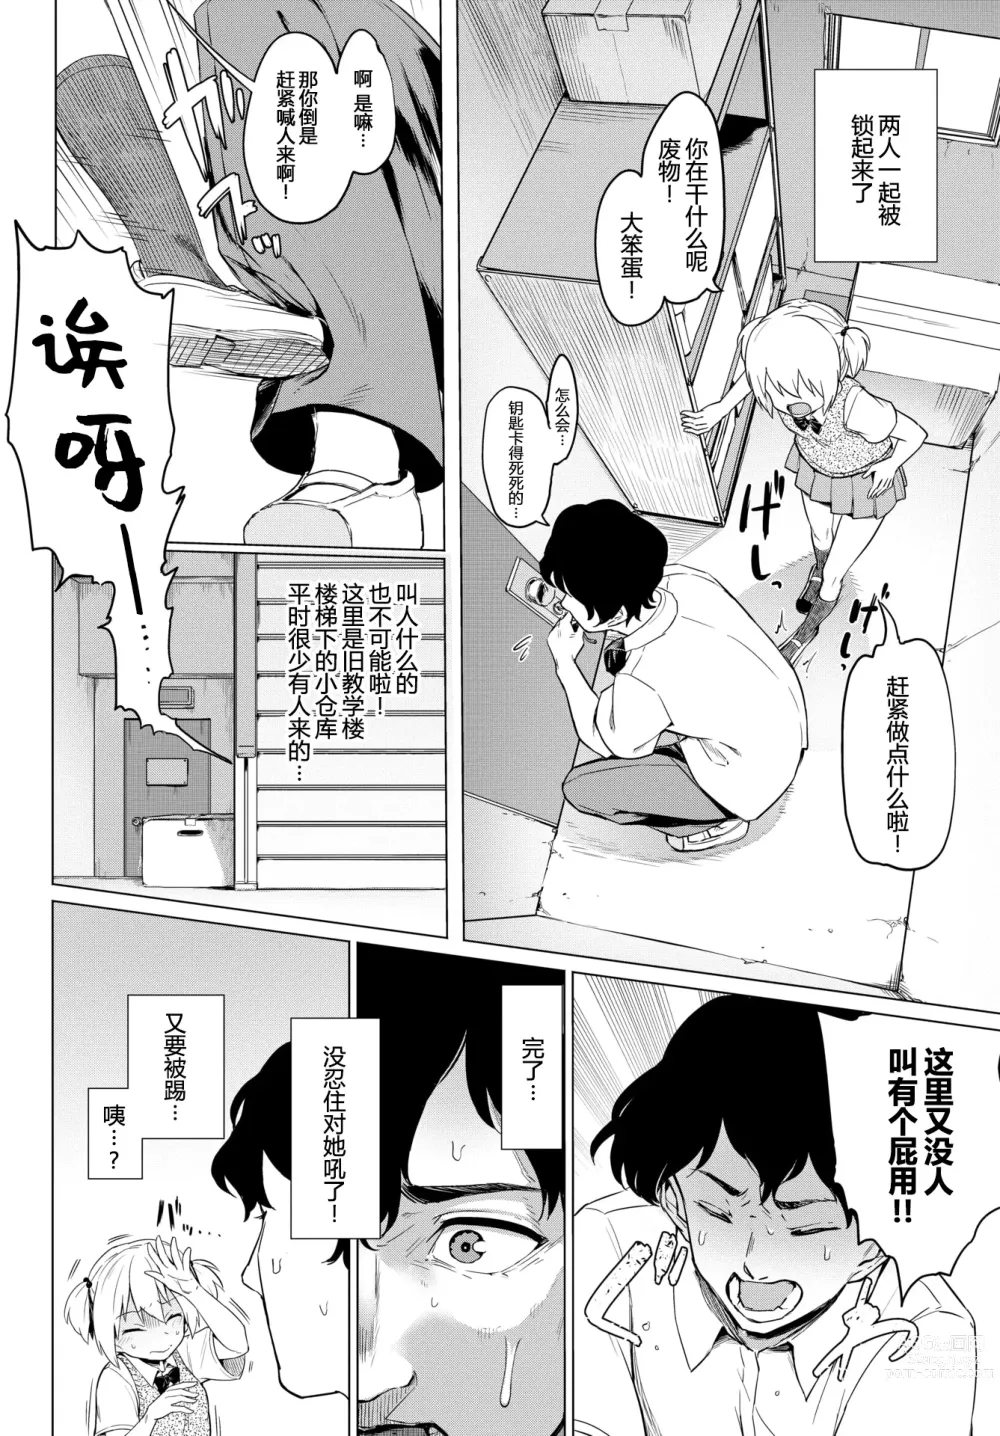 Page 2 of manga 暴君系女子